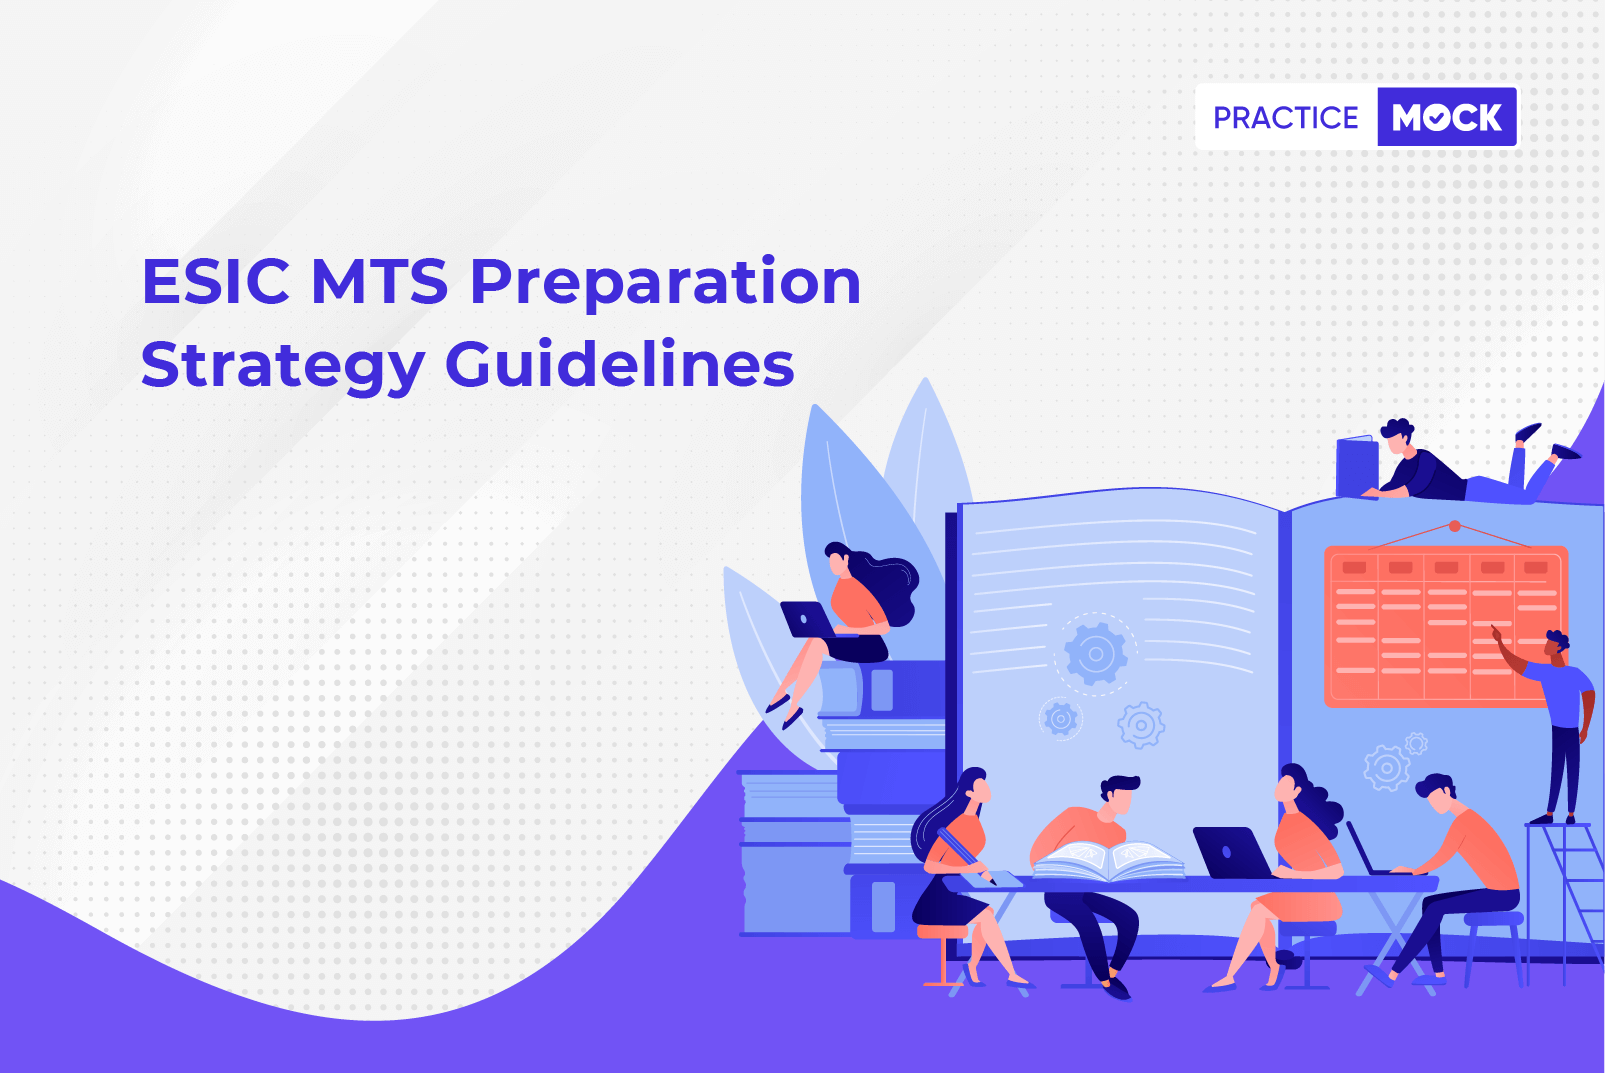 ESIC MTS Preparation Strategy